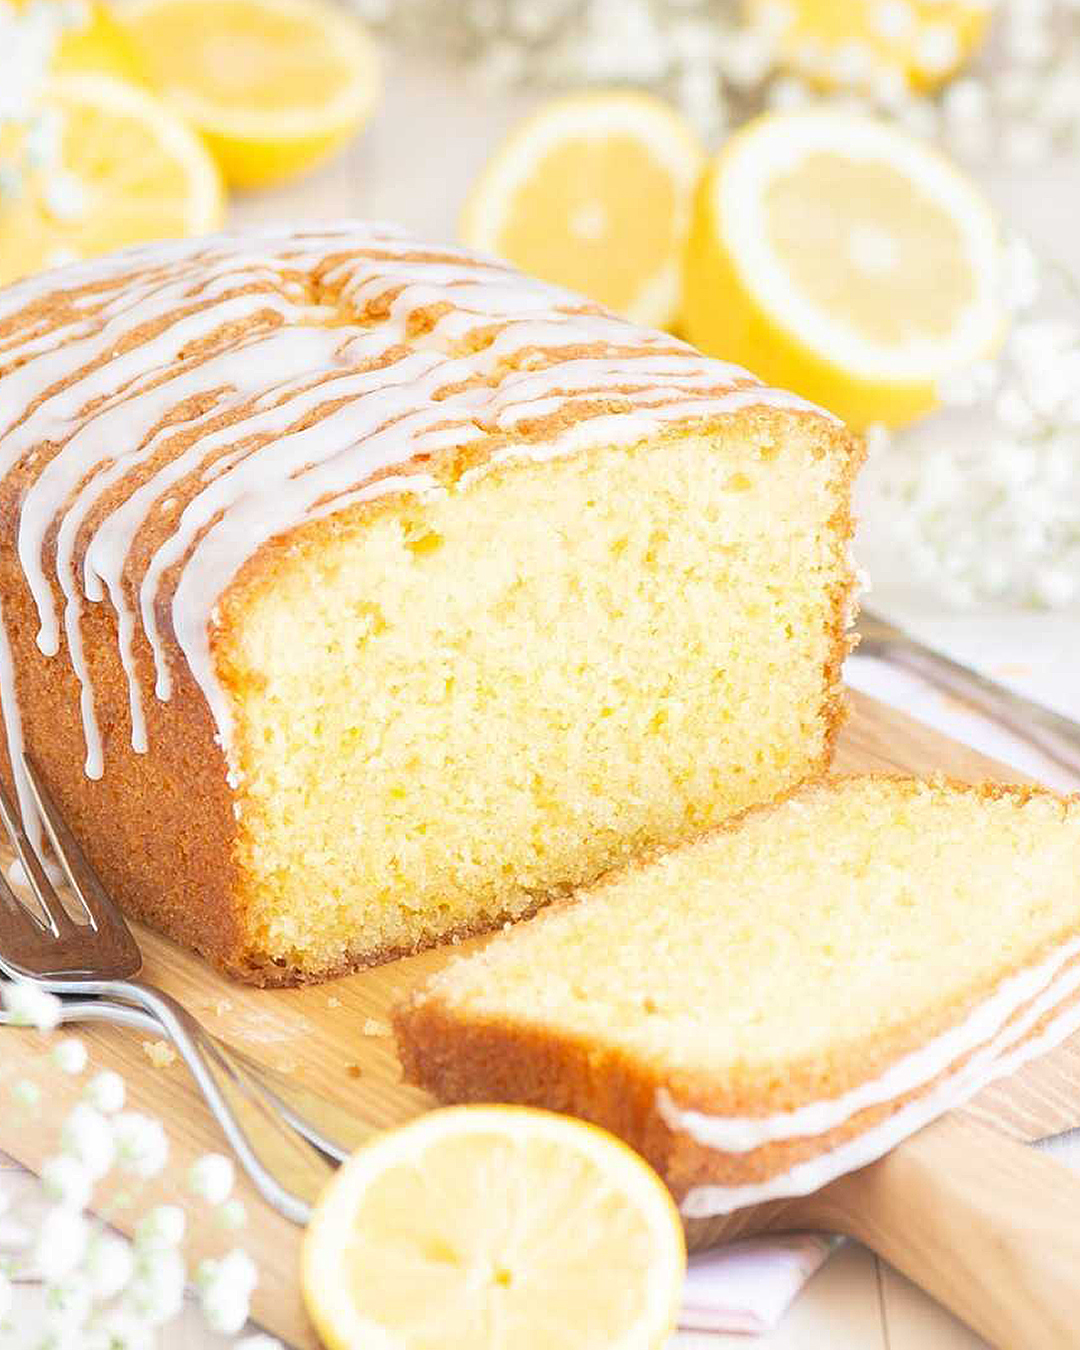 Madeira cake - Wikipedia